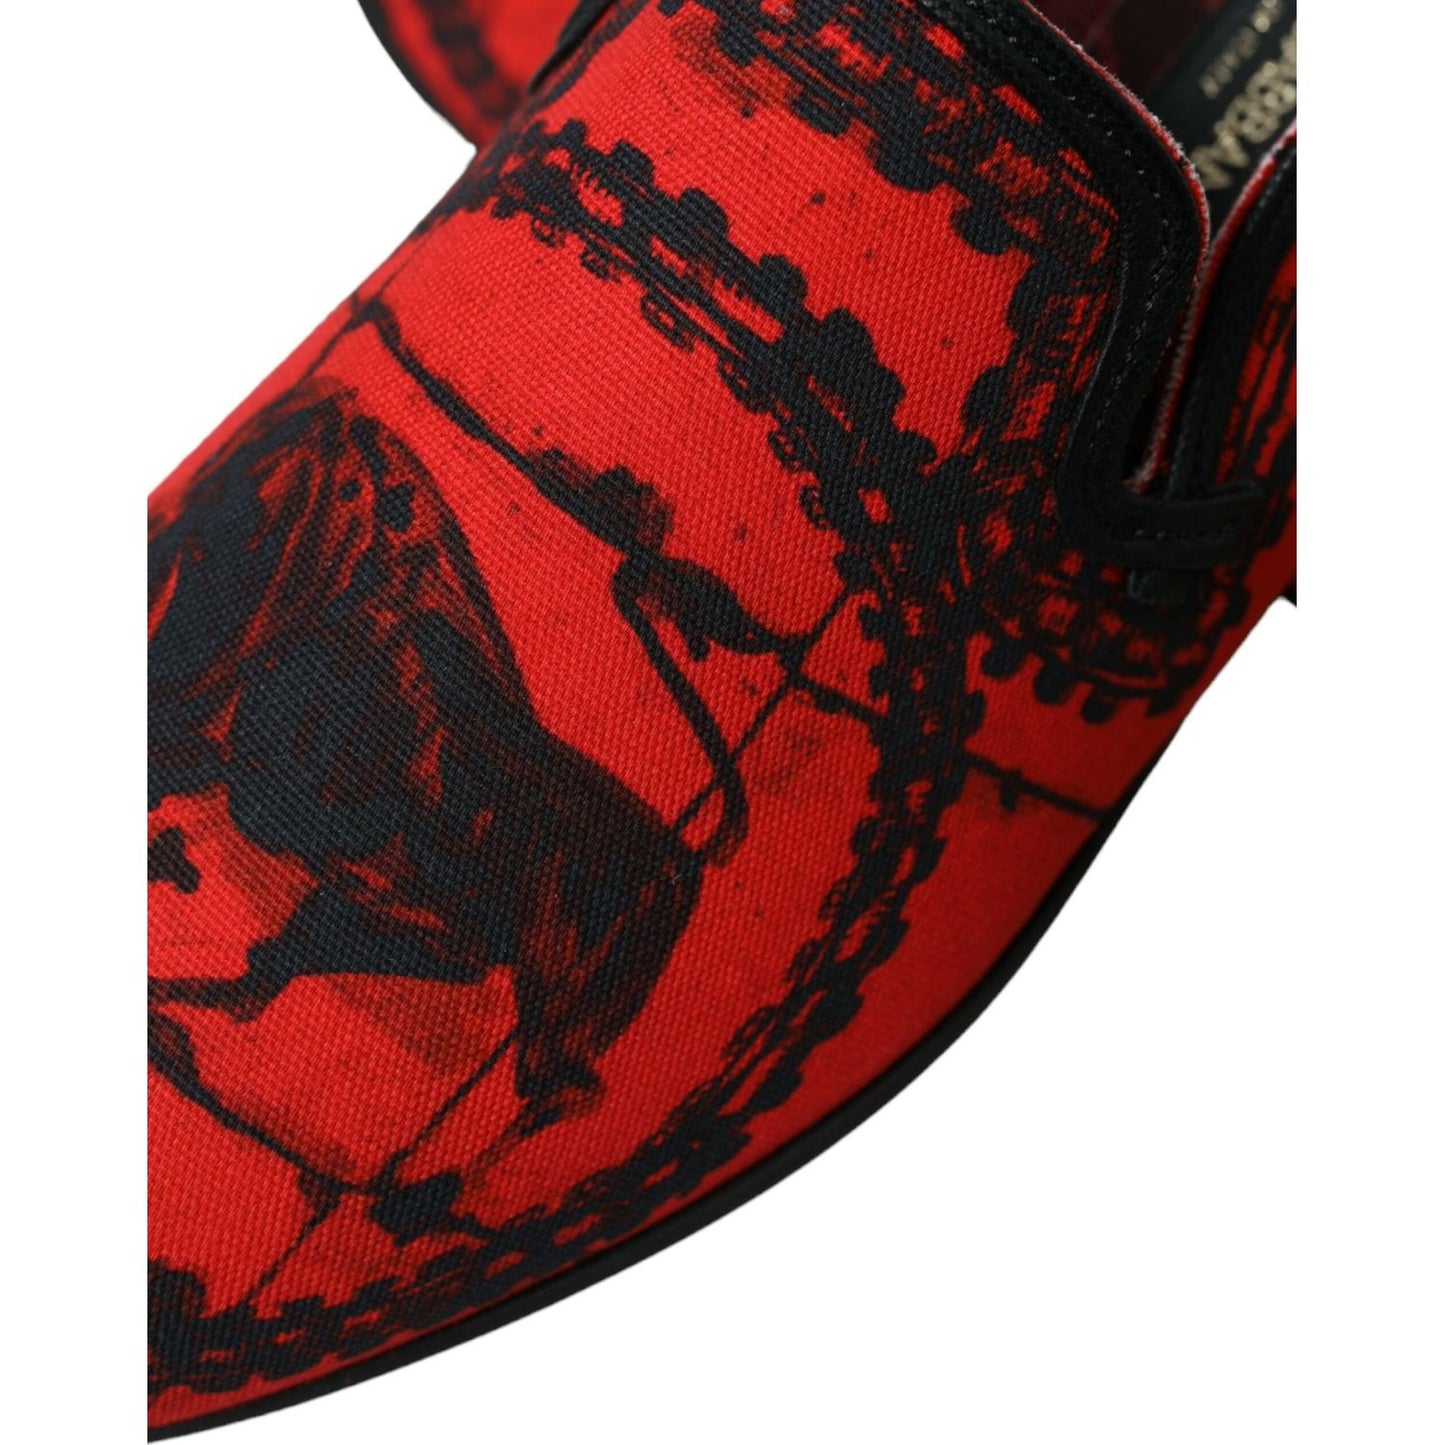 Dolce & Gabbana Torero-Inspired Luxe Red & Black Loafers red-black-torero-loafers-slippers-men-shoes